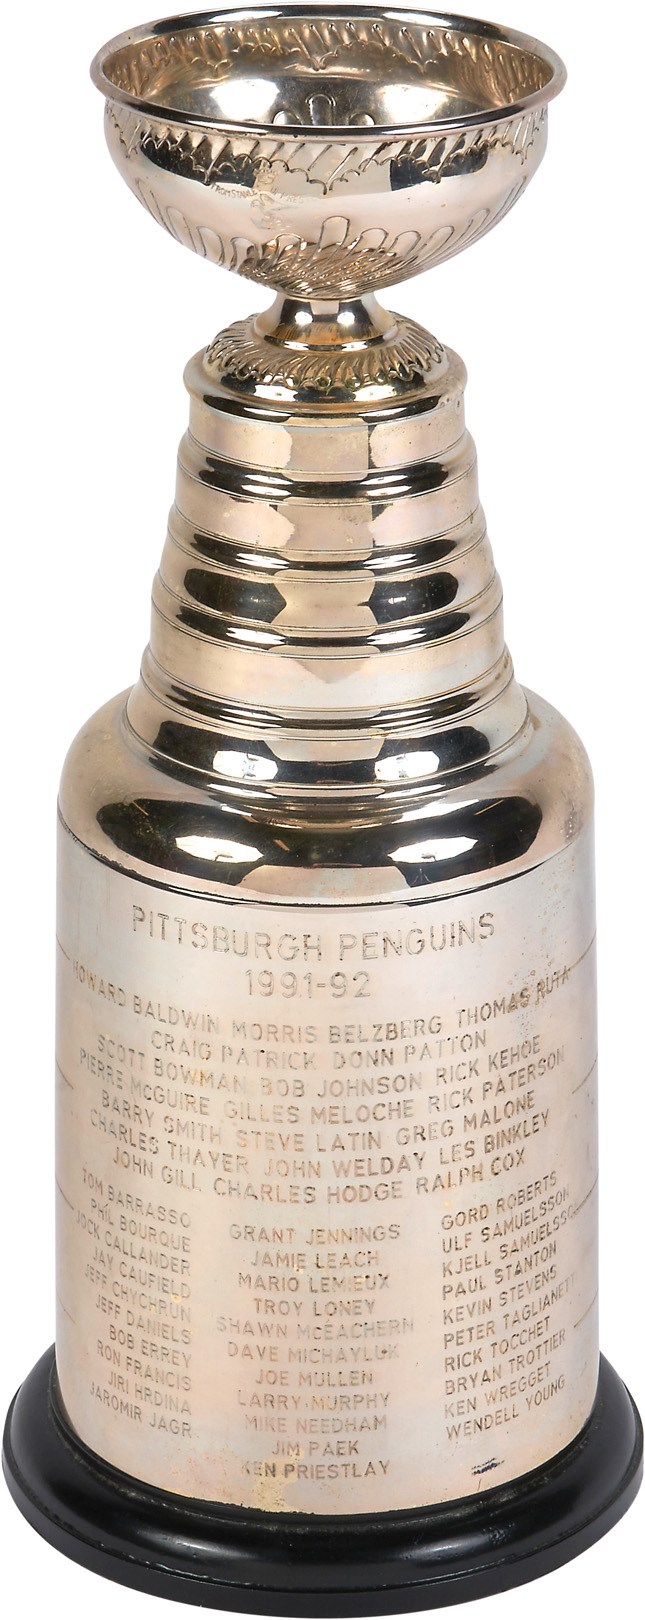 - 1991-92 Craig Patrick Pittsburgh Penguins Stanley Cup Trophy